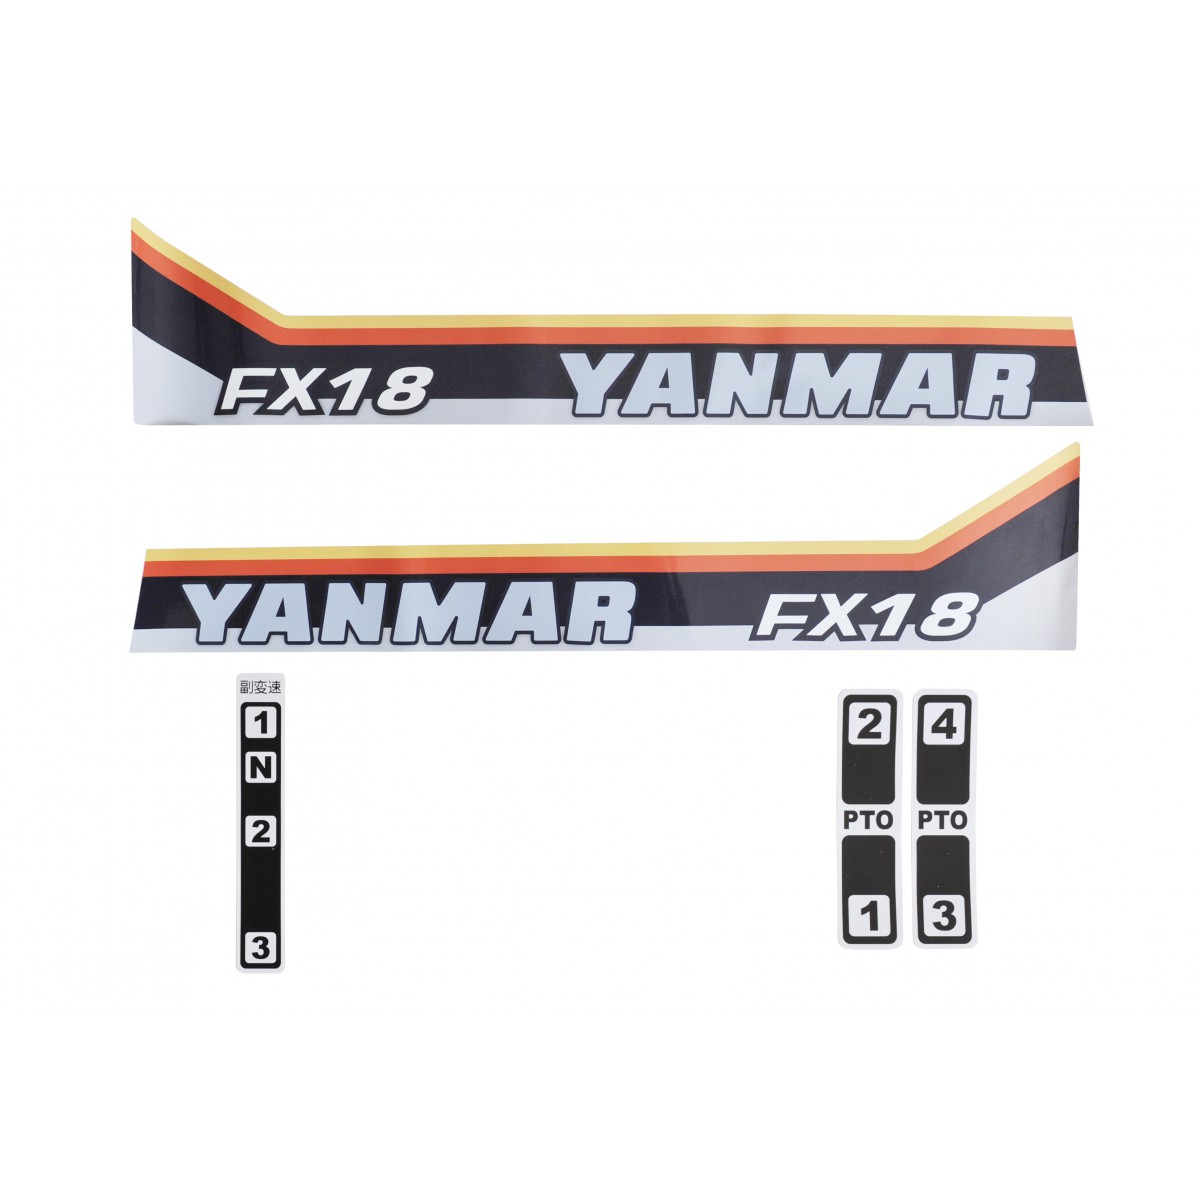 Yanmar FX18 stickers